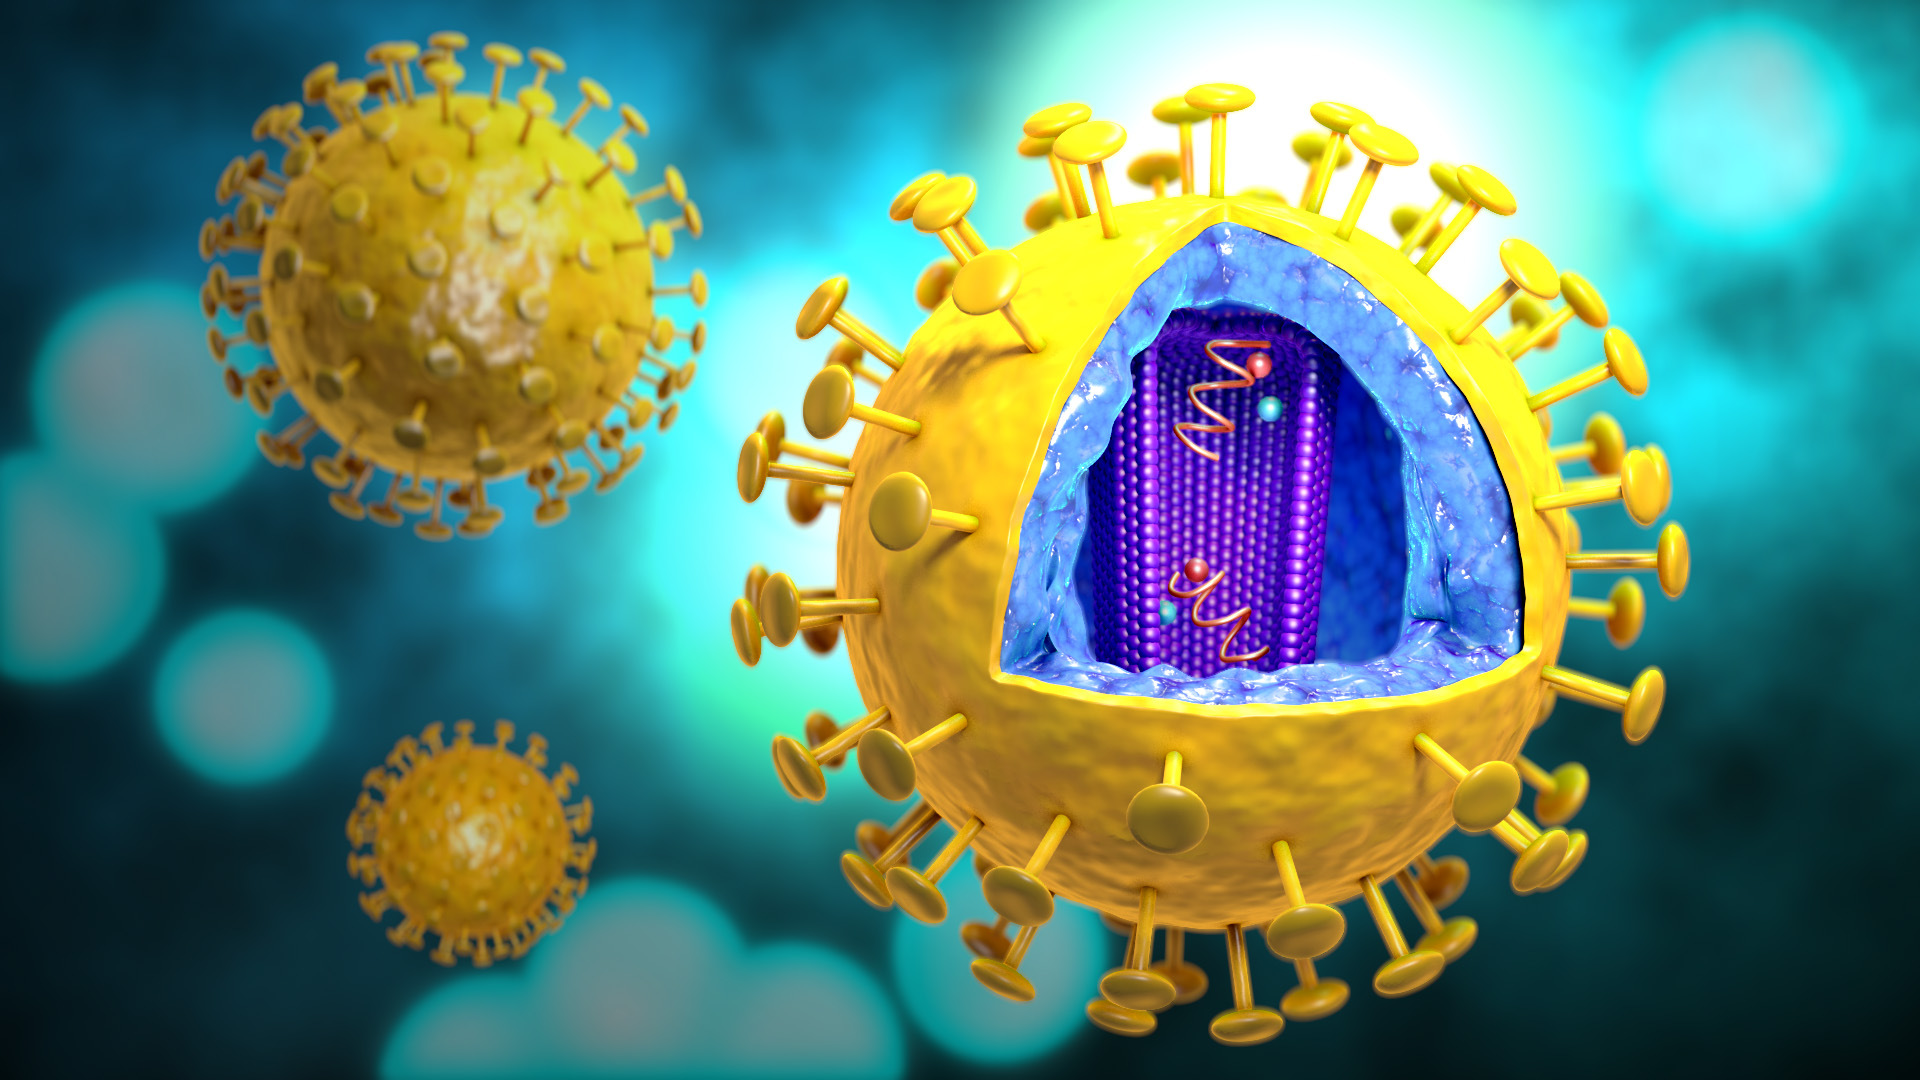 Клетка иммунодефицита. Вирус иммунодефицита человека (Human Immunodeficiency virus). Омикрон коронавирус. Модель вируса. ВИЧ фотографии вируса.